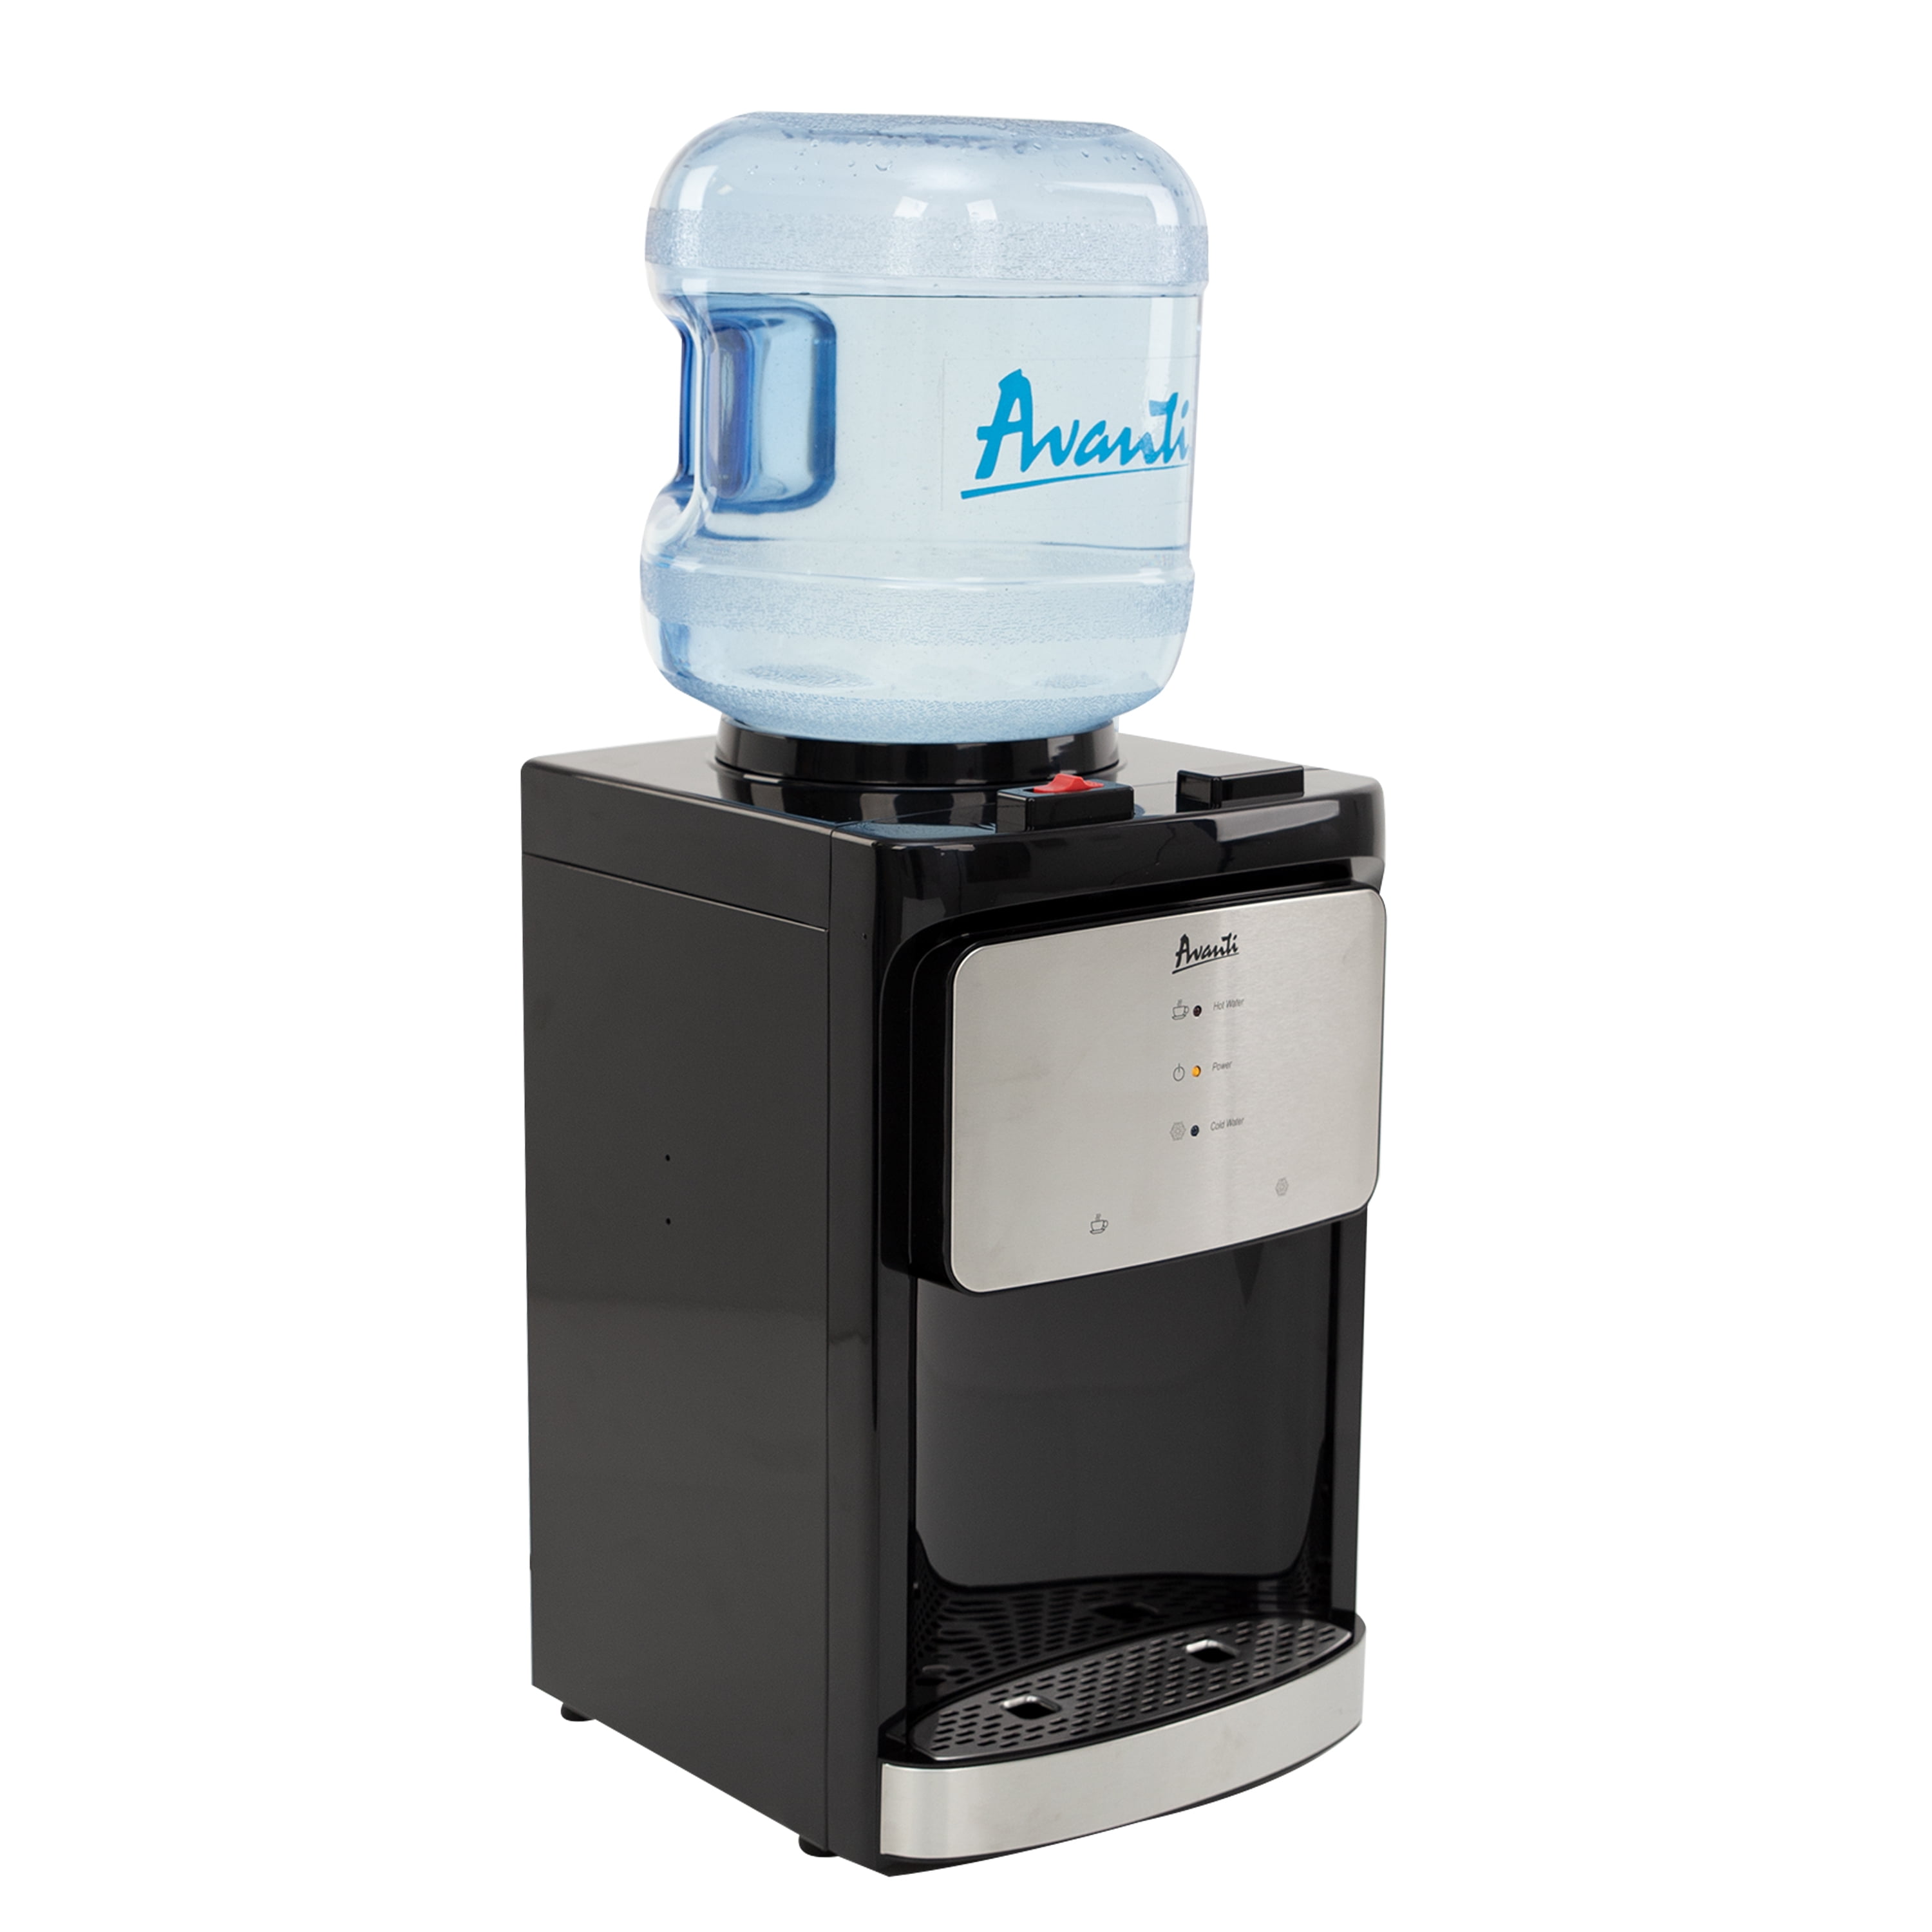 Daruoand 3.5L Slim Fridge Beverage Dispenser with Spigot Water Dispenser  Travel Desktop Water Container Leakproof Beverage Tank with Wide Open for